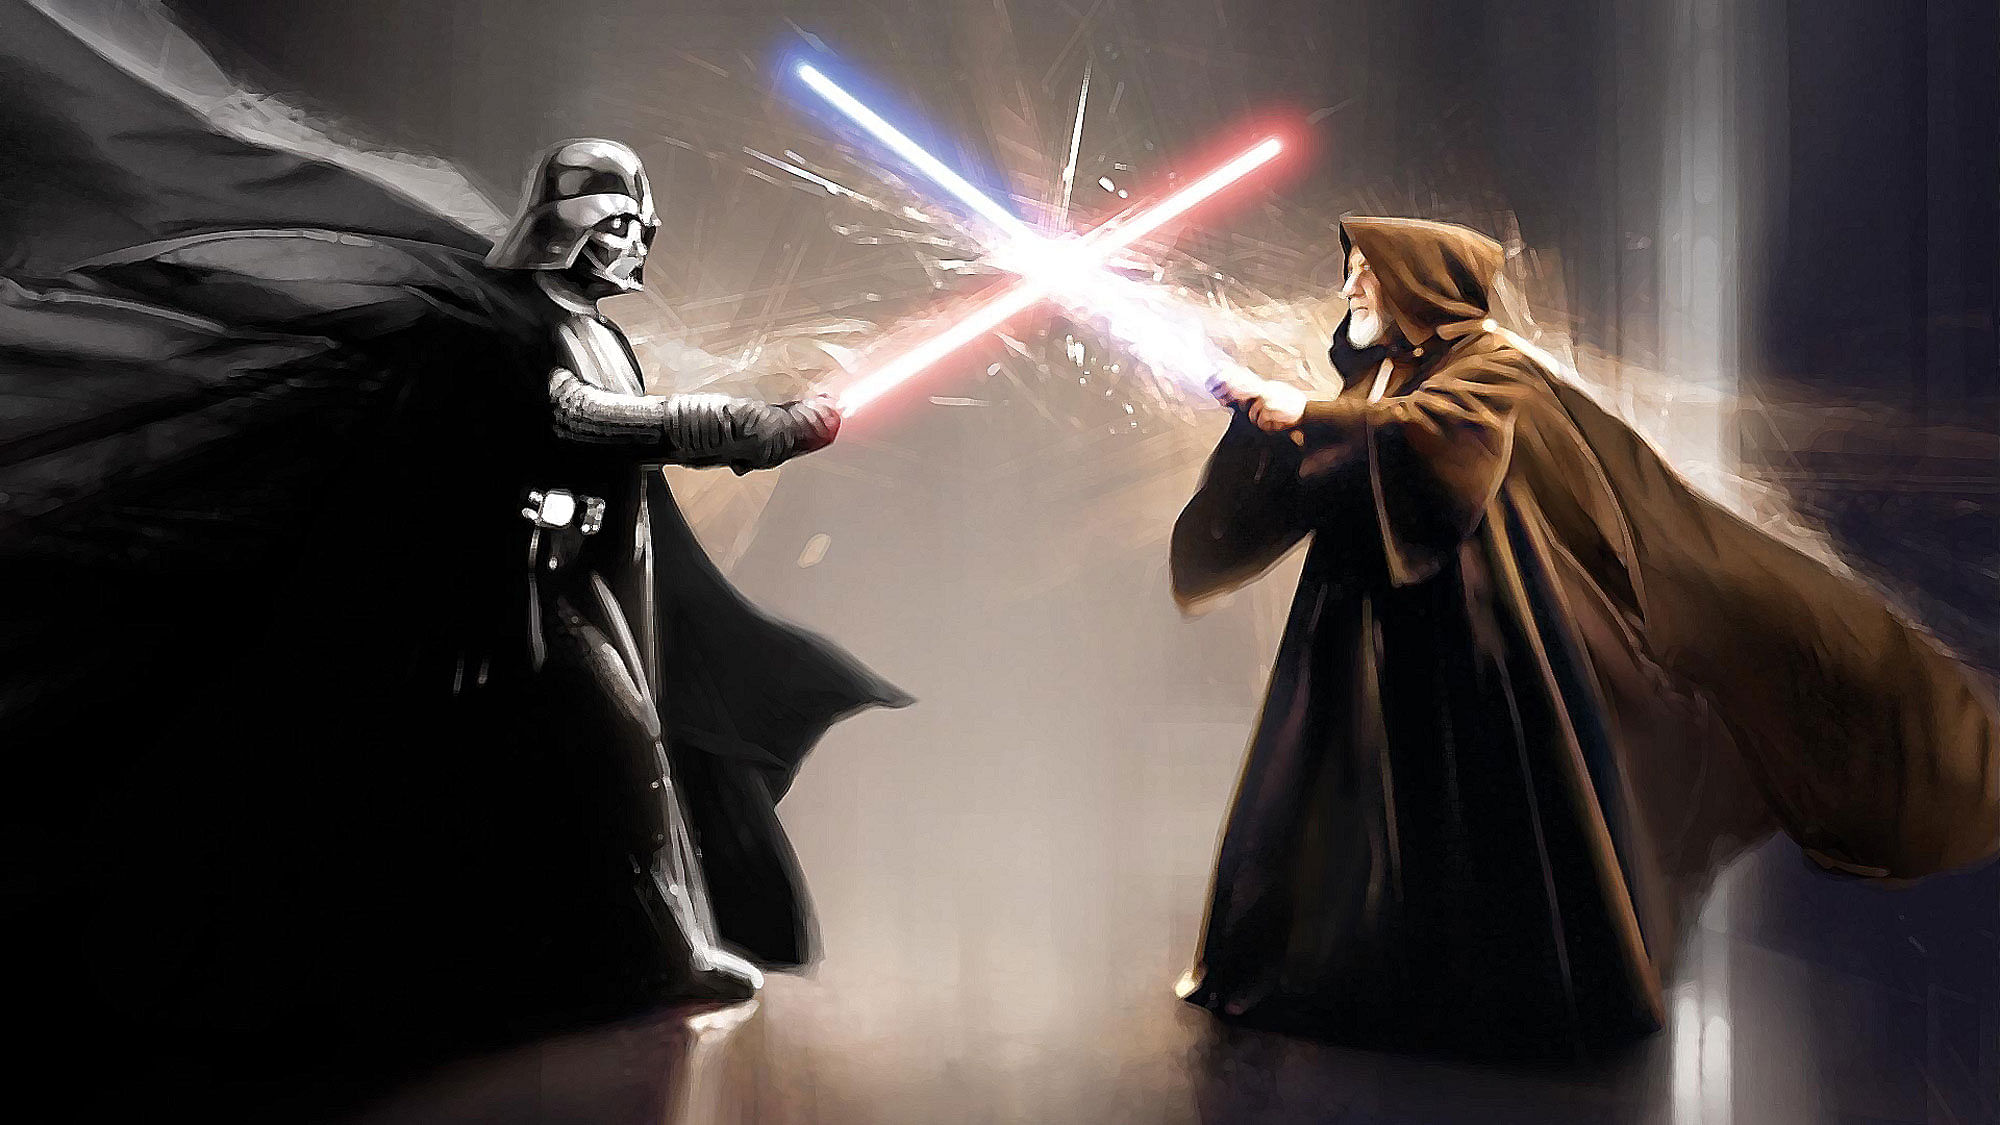 Lightsaber battles are epic in Star Wars movies. (Photo Courtesy: <a href="http://www.wallpaperup.com/40231/Darth_Vader_Obi_Wan_Kenobi_movies_star_wars_sci-fi_weapons_lightsaber_battle_video_games.html">WallpapaerUP</a>)